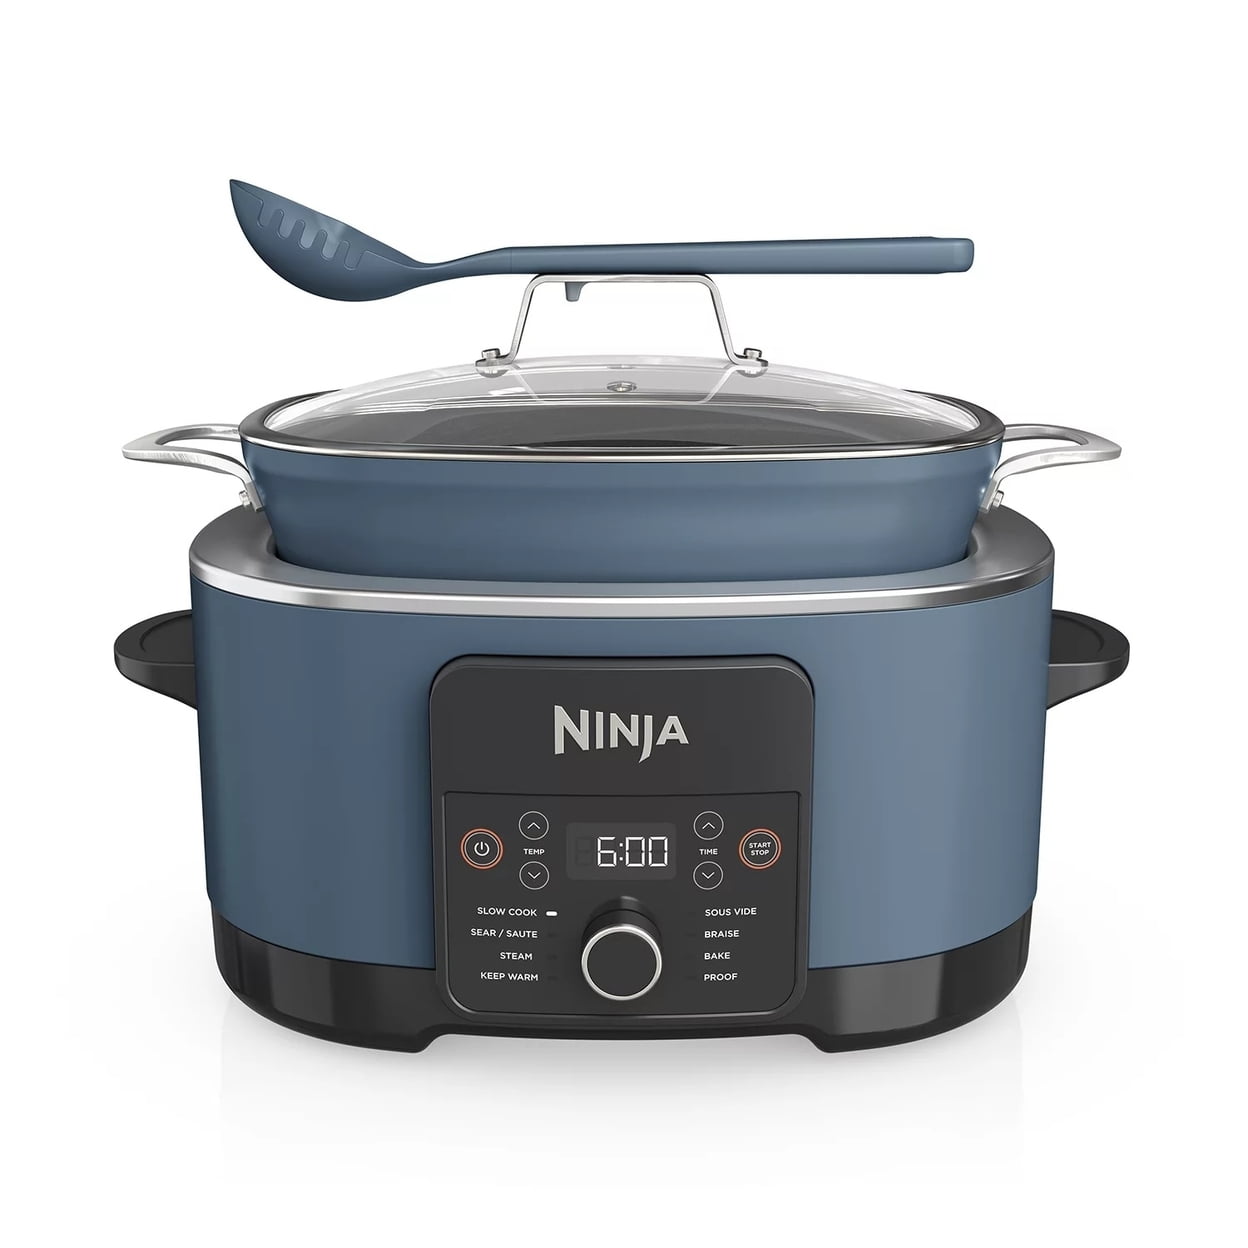 Ninja's 8-qt. Foodi Multi-Cooker can steam, air fry, sous-vide, and more at  $150 (Reg. $230+)